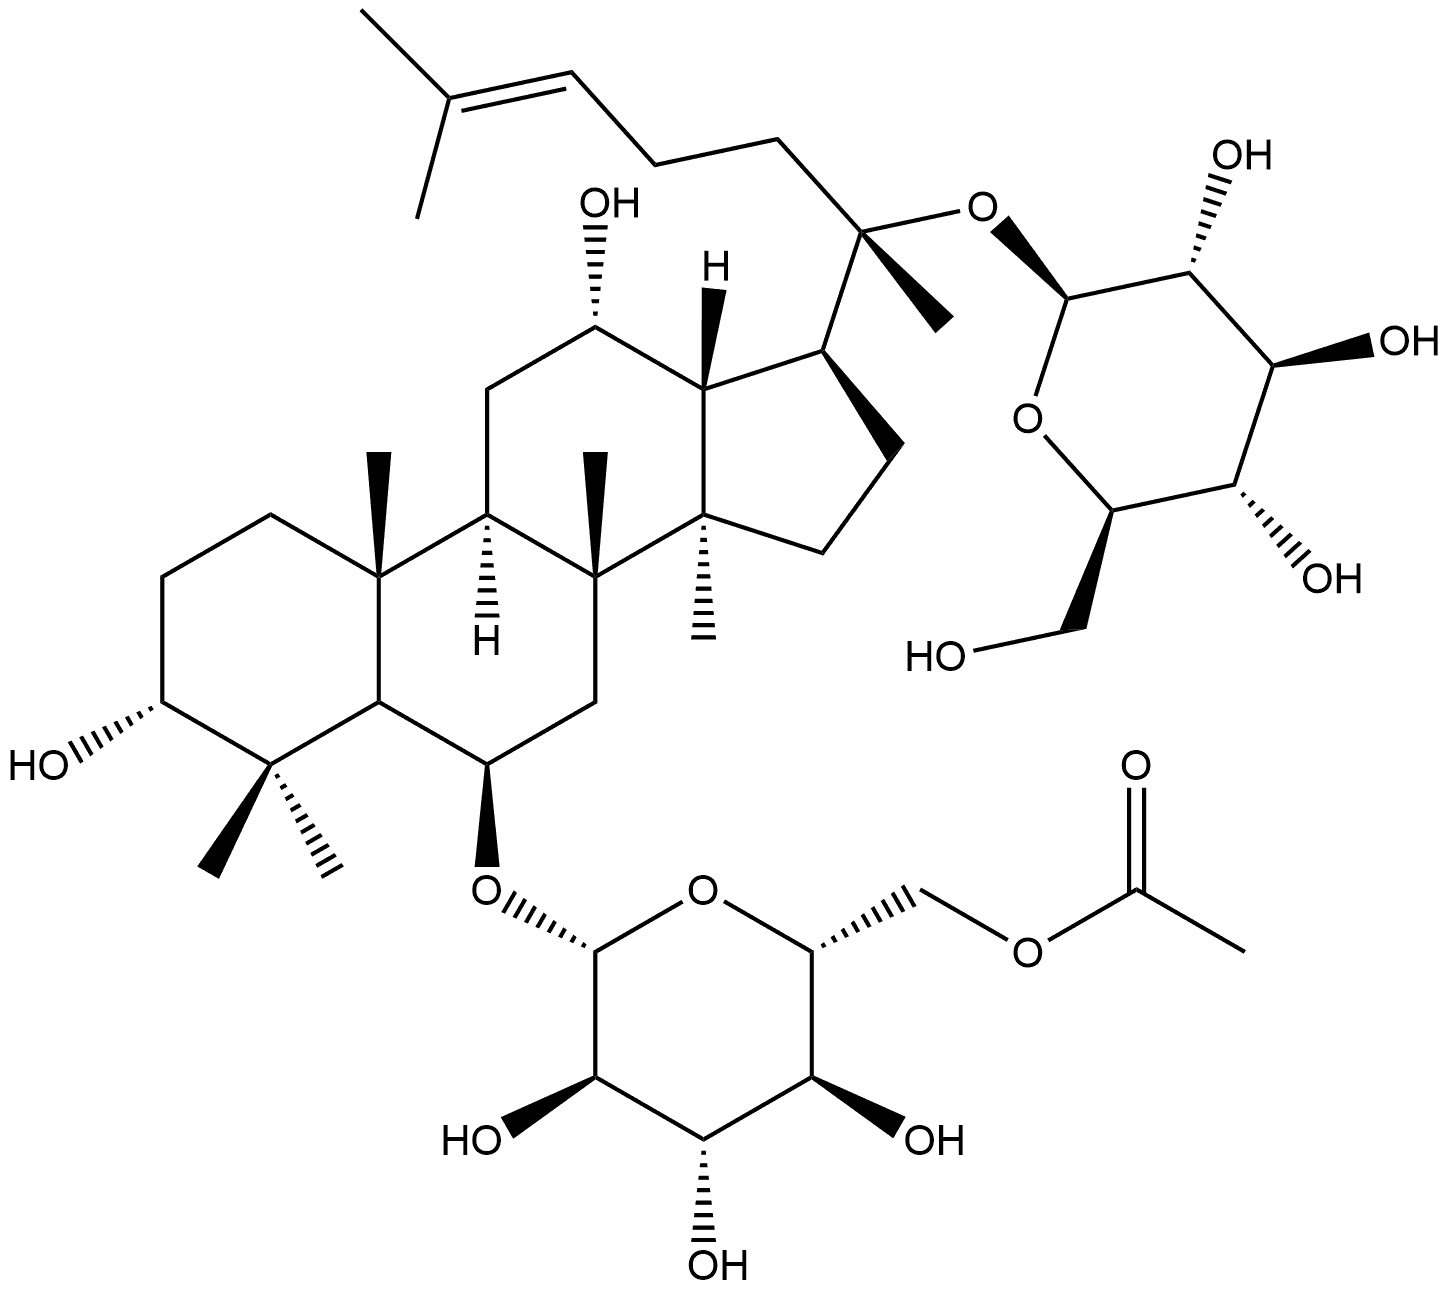 β-D-Glucopyranoside, (3β,6α,12β)-6-[(6-O-acetyl-β-D-glucopyranosyl)oxy]-3,12-dihydroxydammar-24-en-20-yl